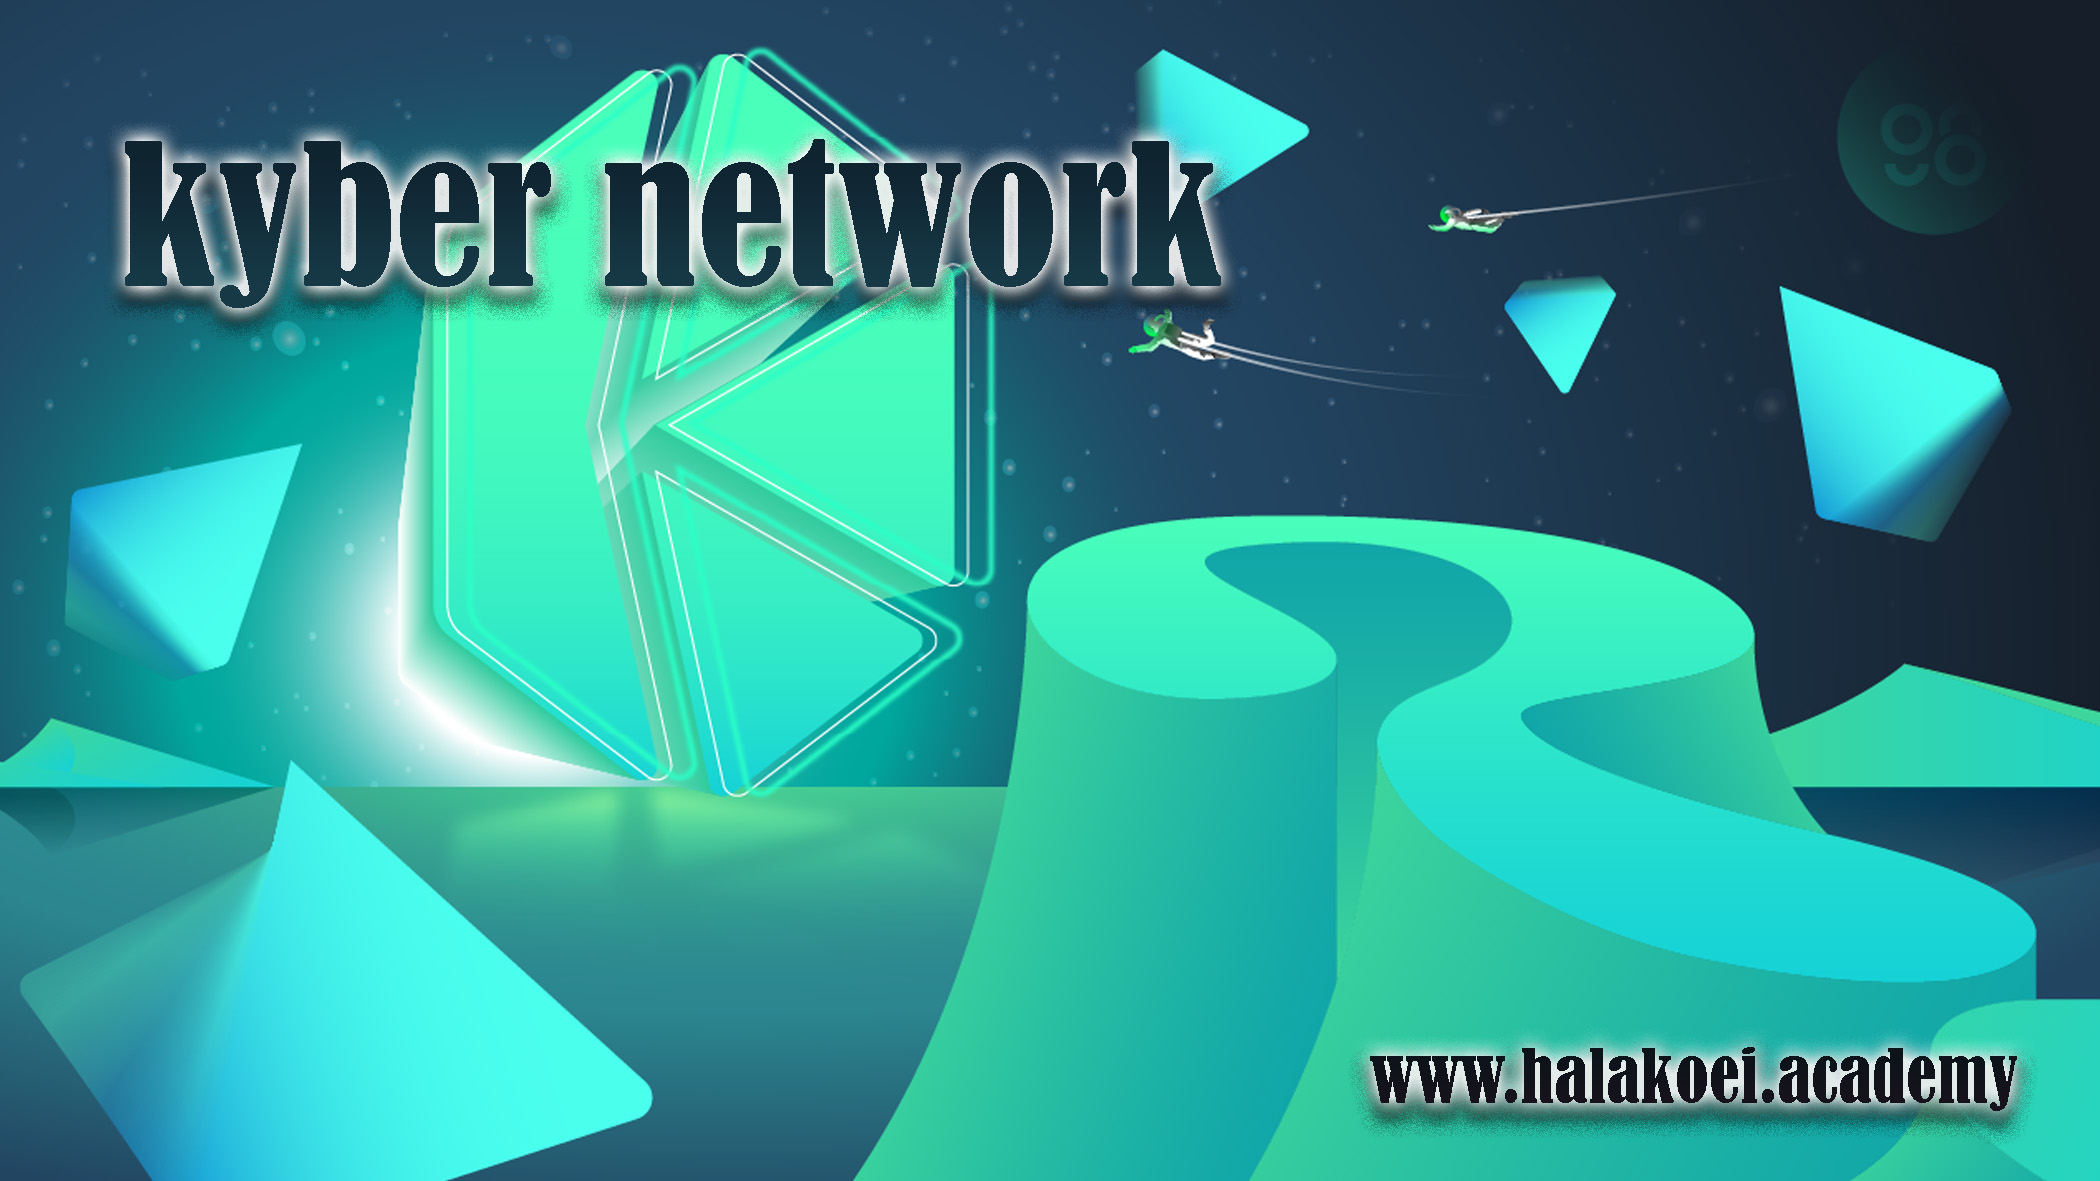 kyber network